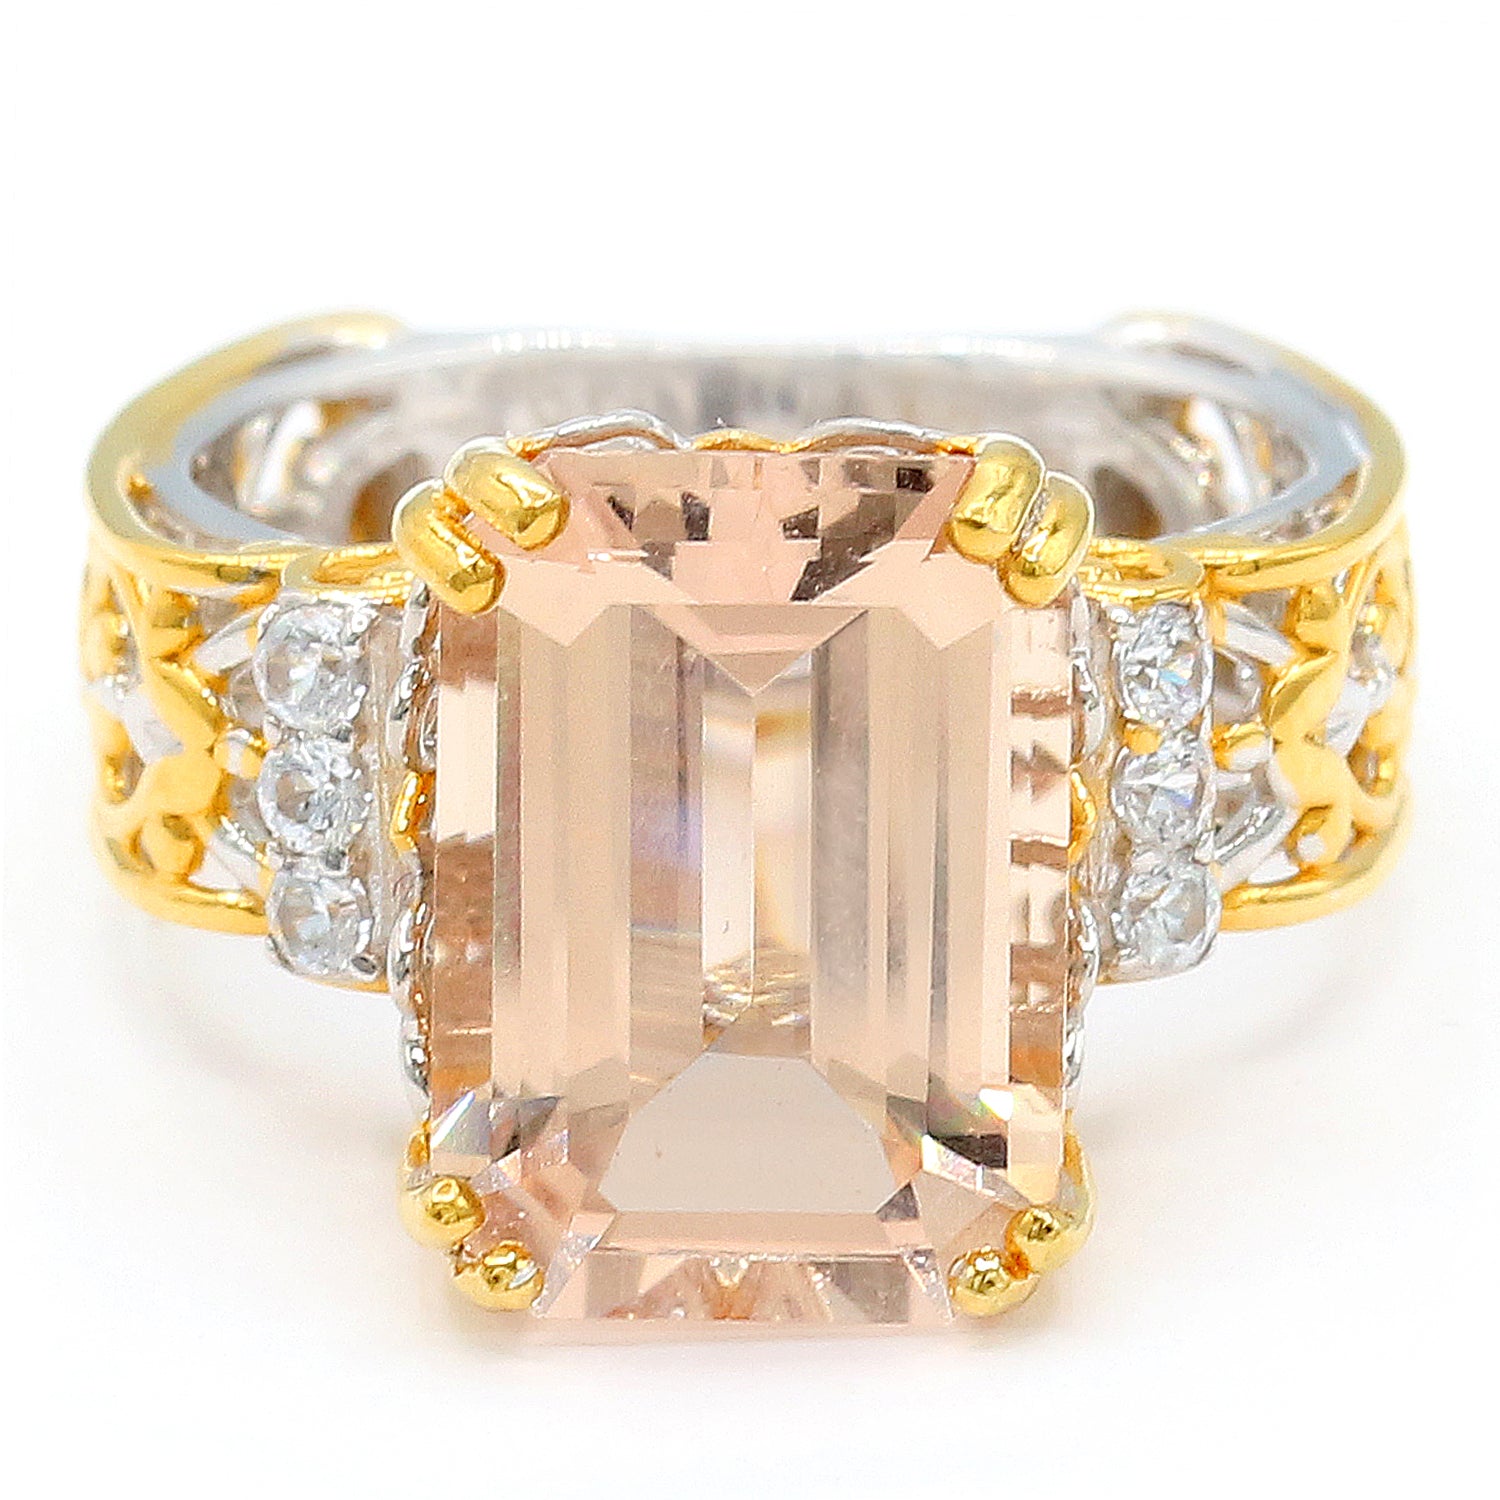 Limited Edition Gems en Vogue 6.61ctw Peach Morganite & White Zircon Ring